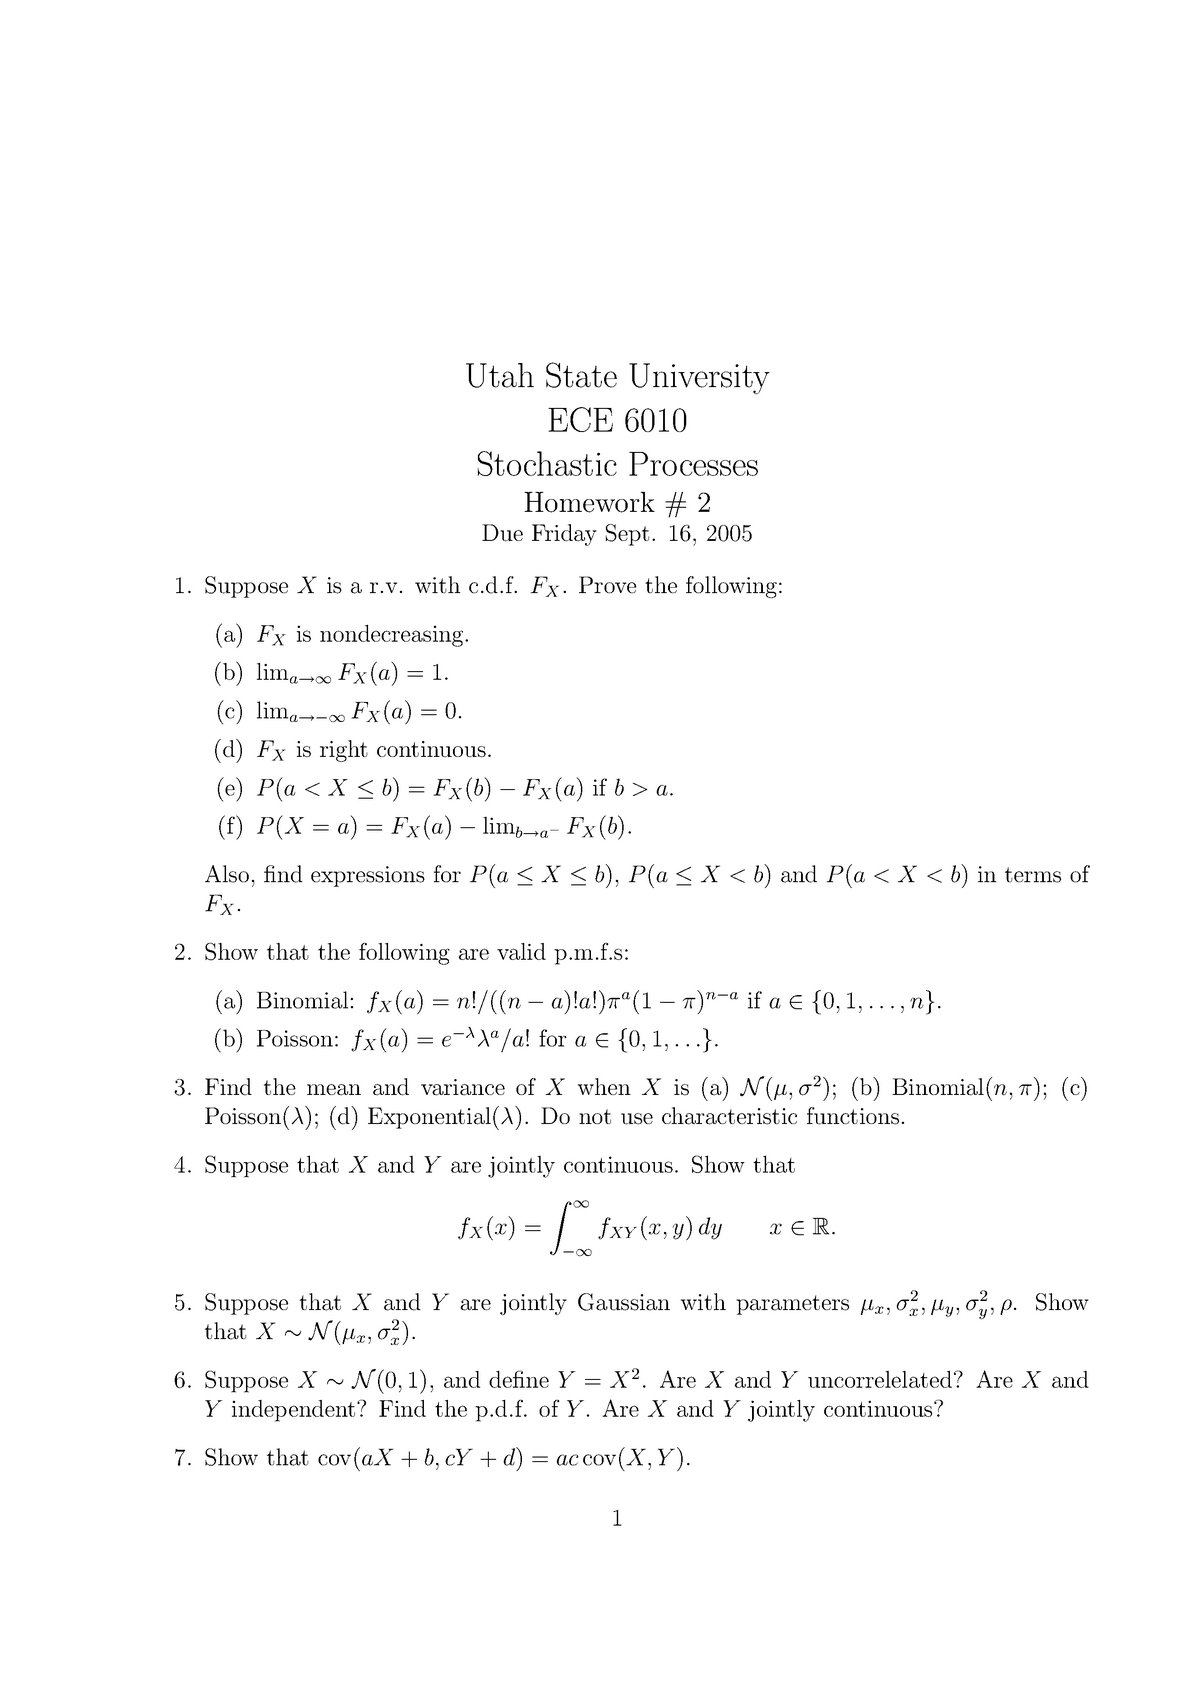 homework-2-spring-2006-utah-state-university-ece-6010-stochastic-processes-homework-2-due